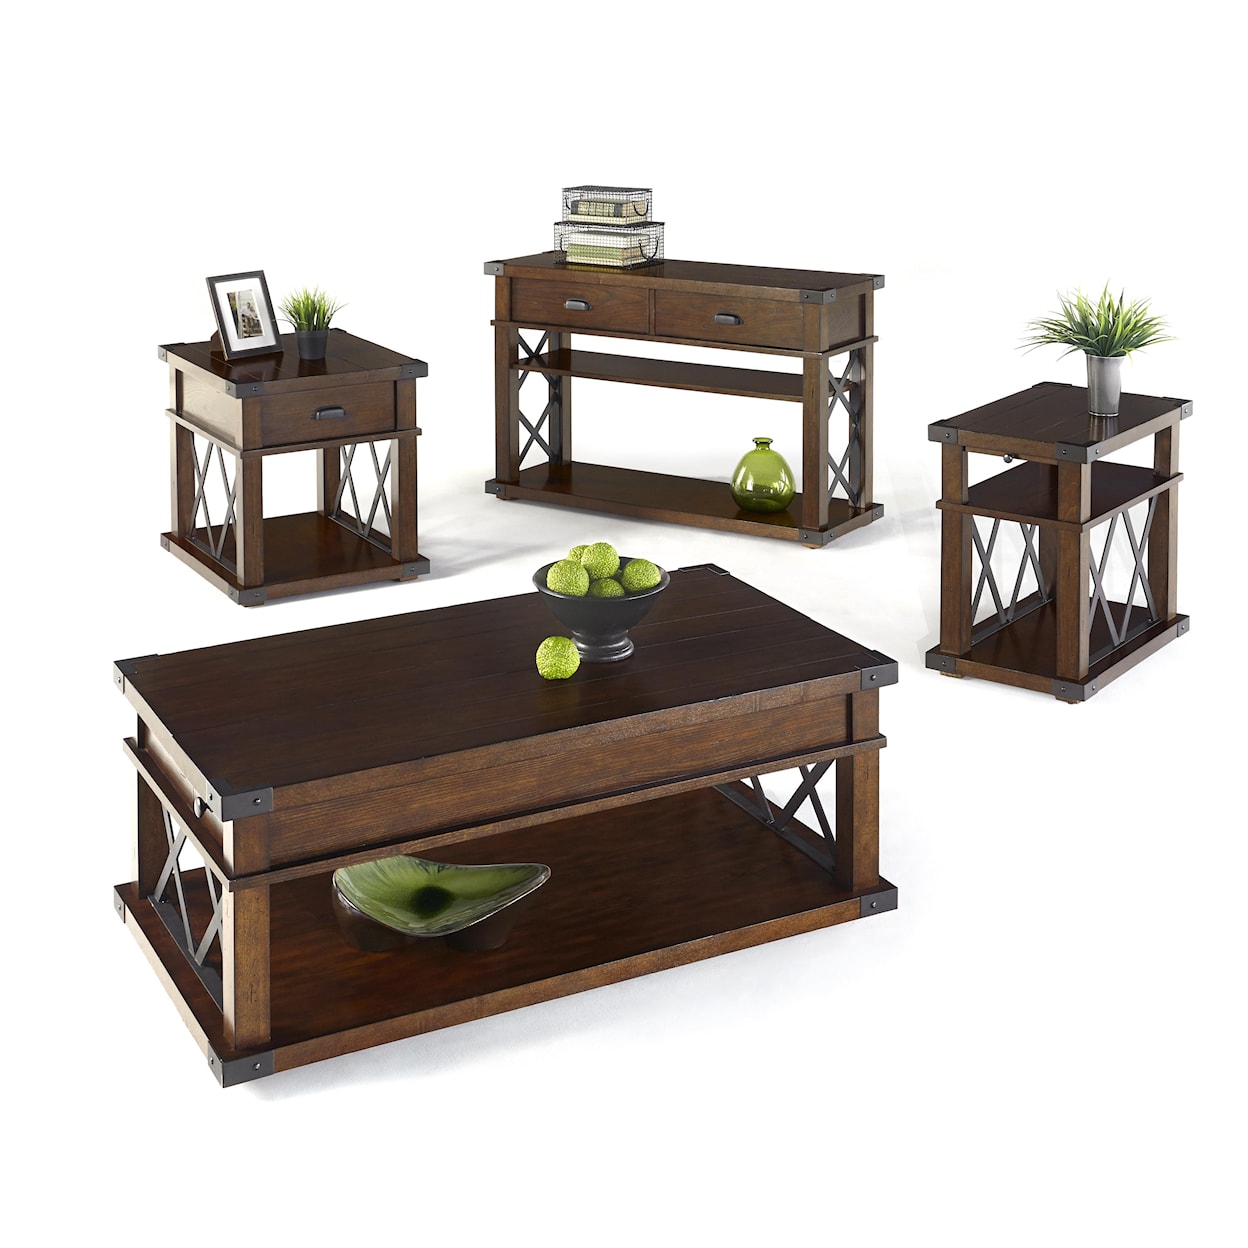 Progressive Furniture Landmark Castered Cocktail Table